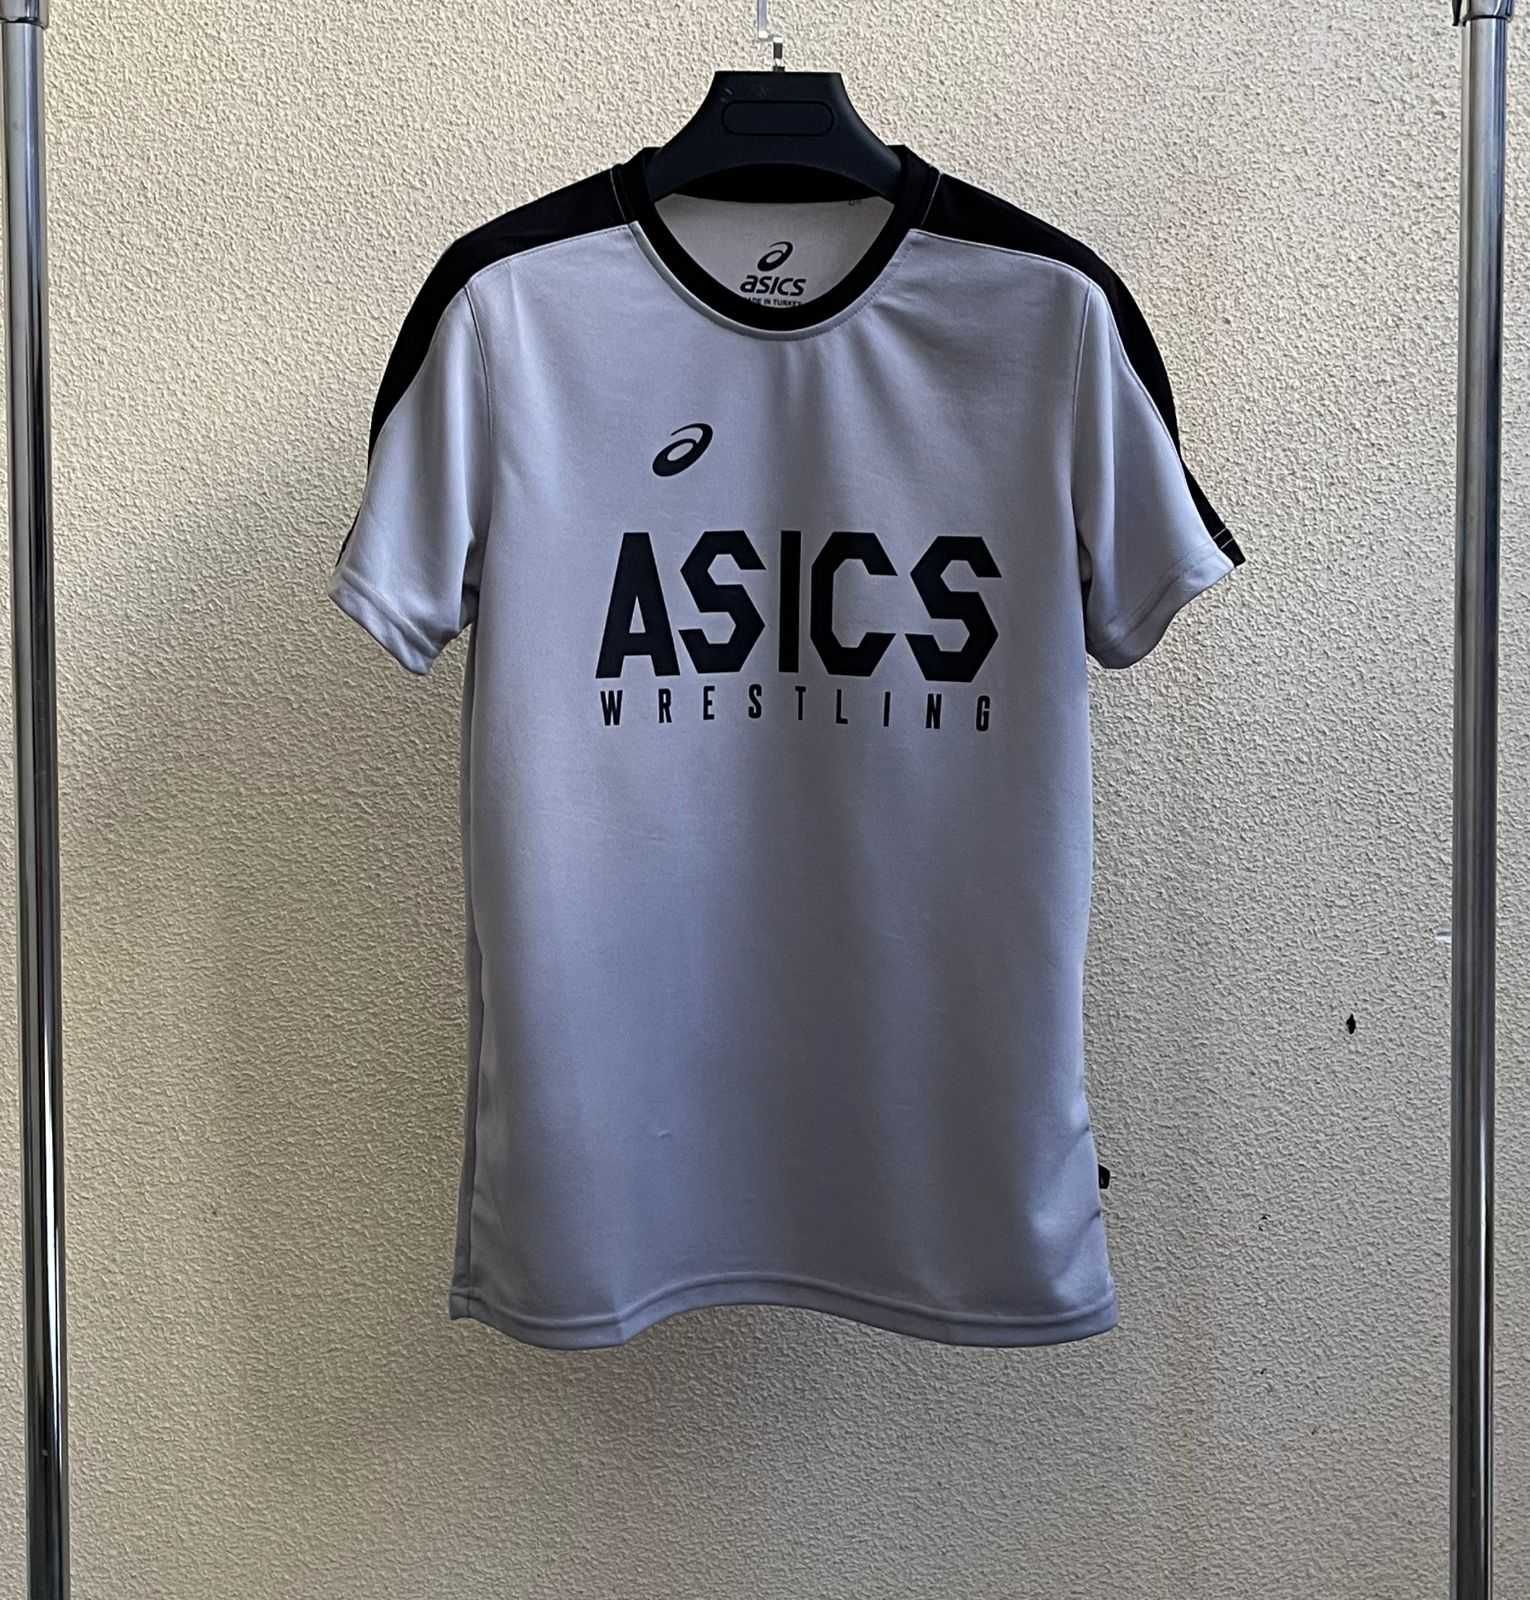 Asics Wrestling спортивная футболка мужская (2725)